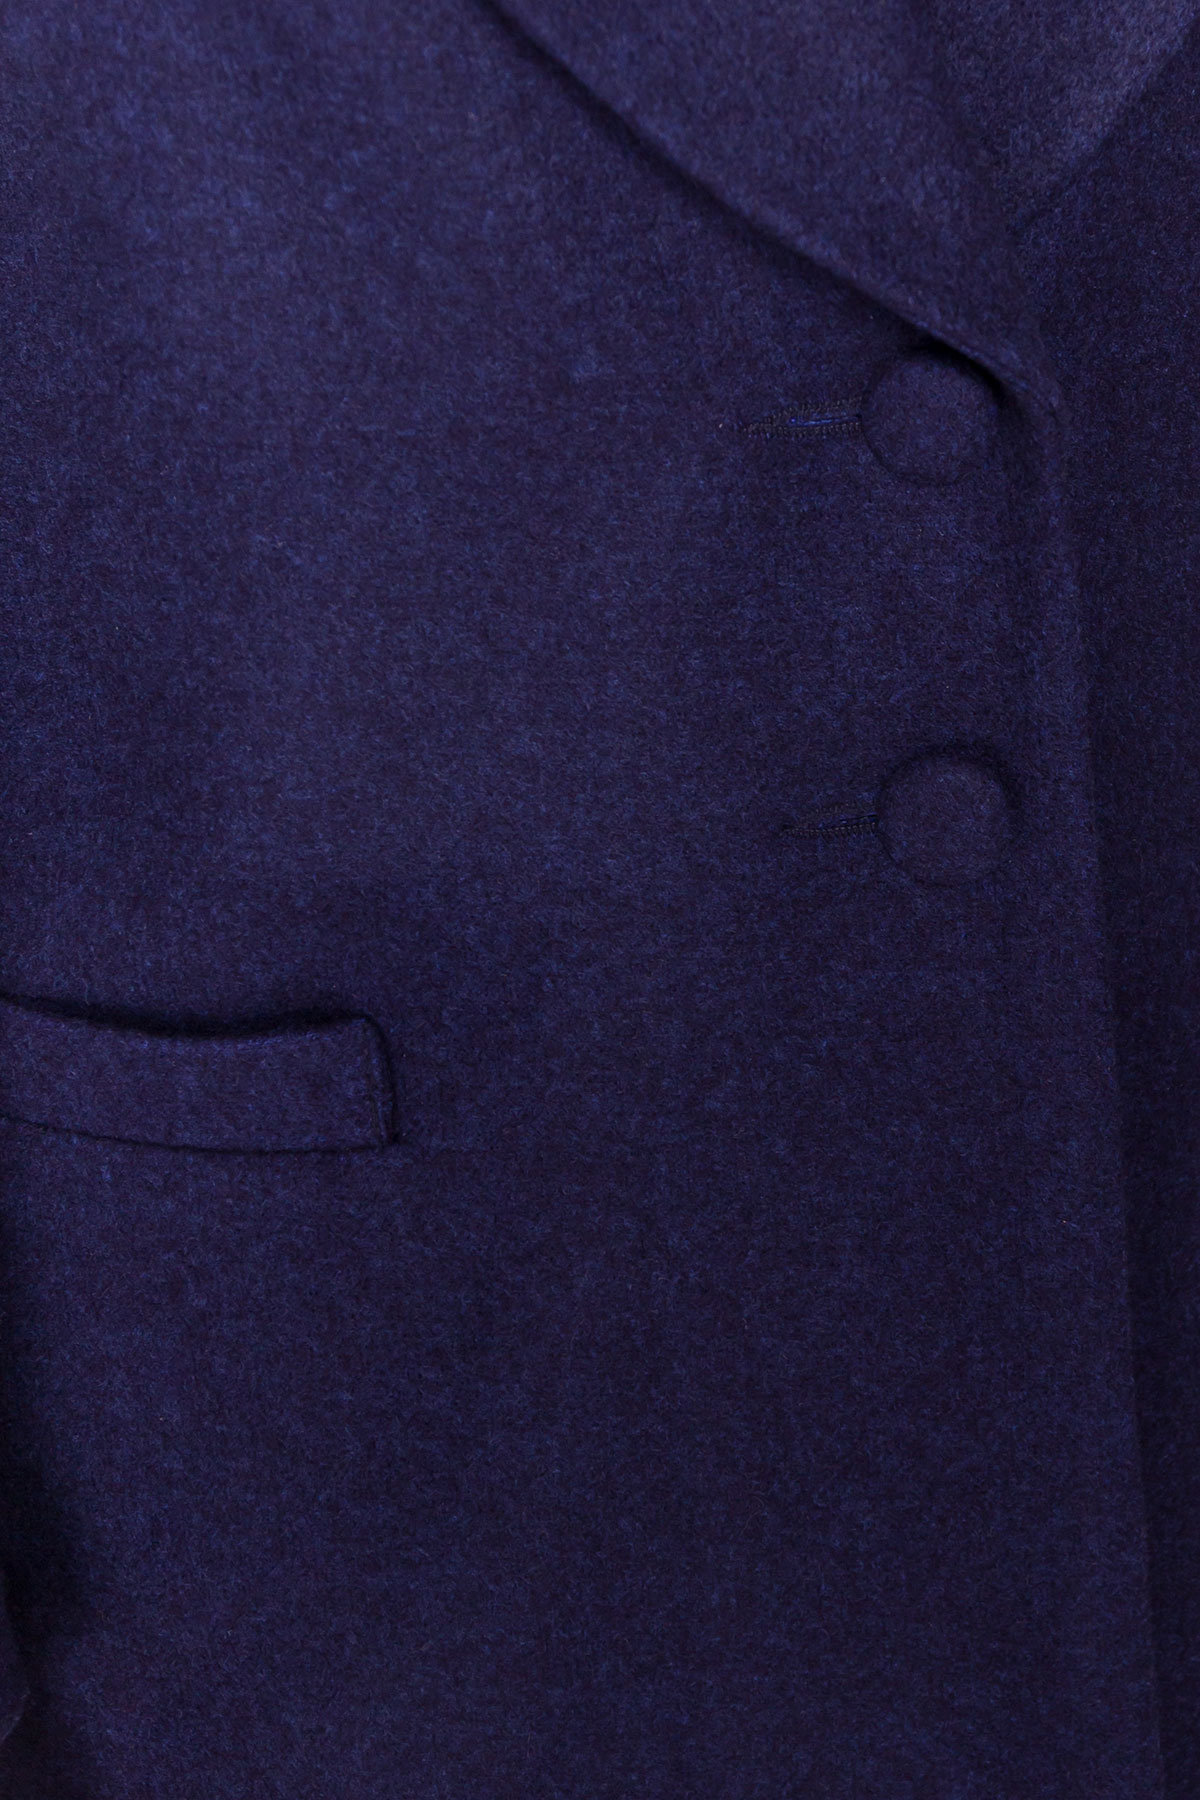 Демисезонное пальто Вива 4558 АРТ. 37261 Цвет: Темно-синий 17 - фото 5, интернет магазин tm-modus.ru